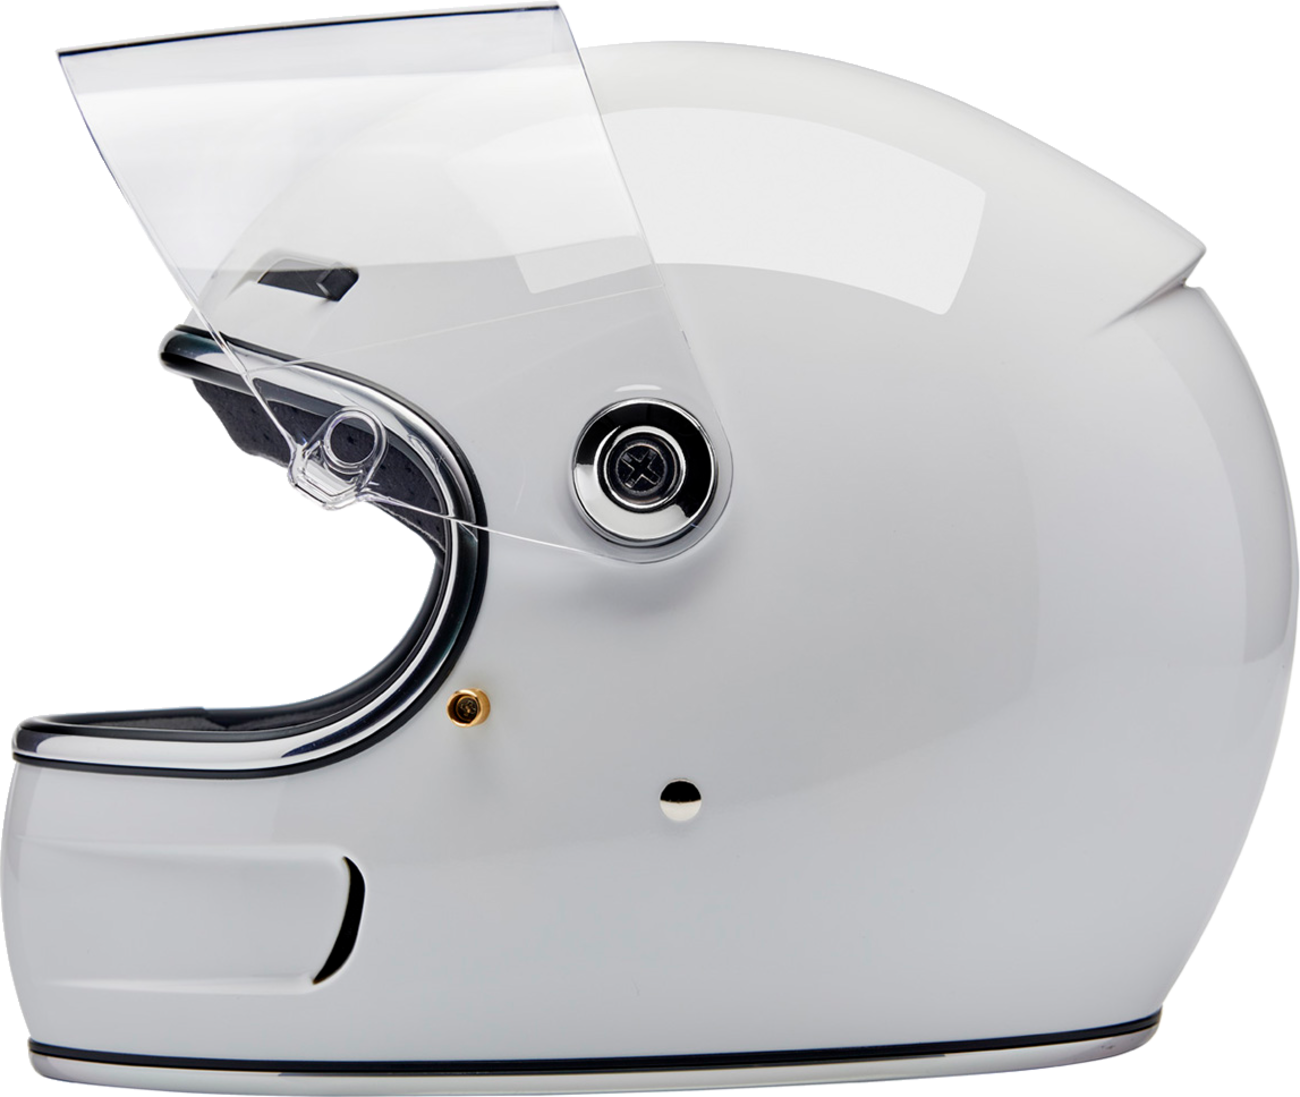 BILTWELL Gringo SV Helmet - Gloss White - Small 1006-104-502